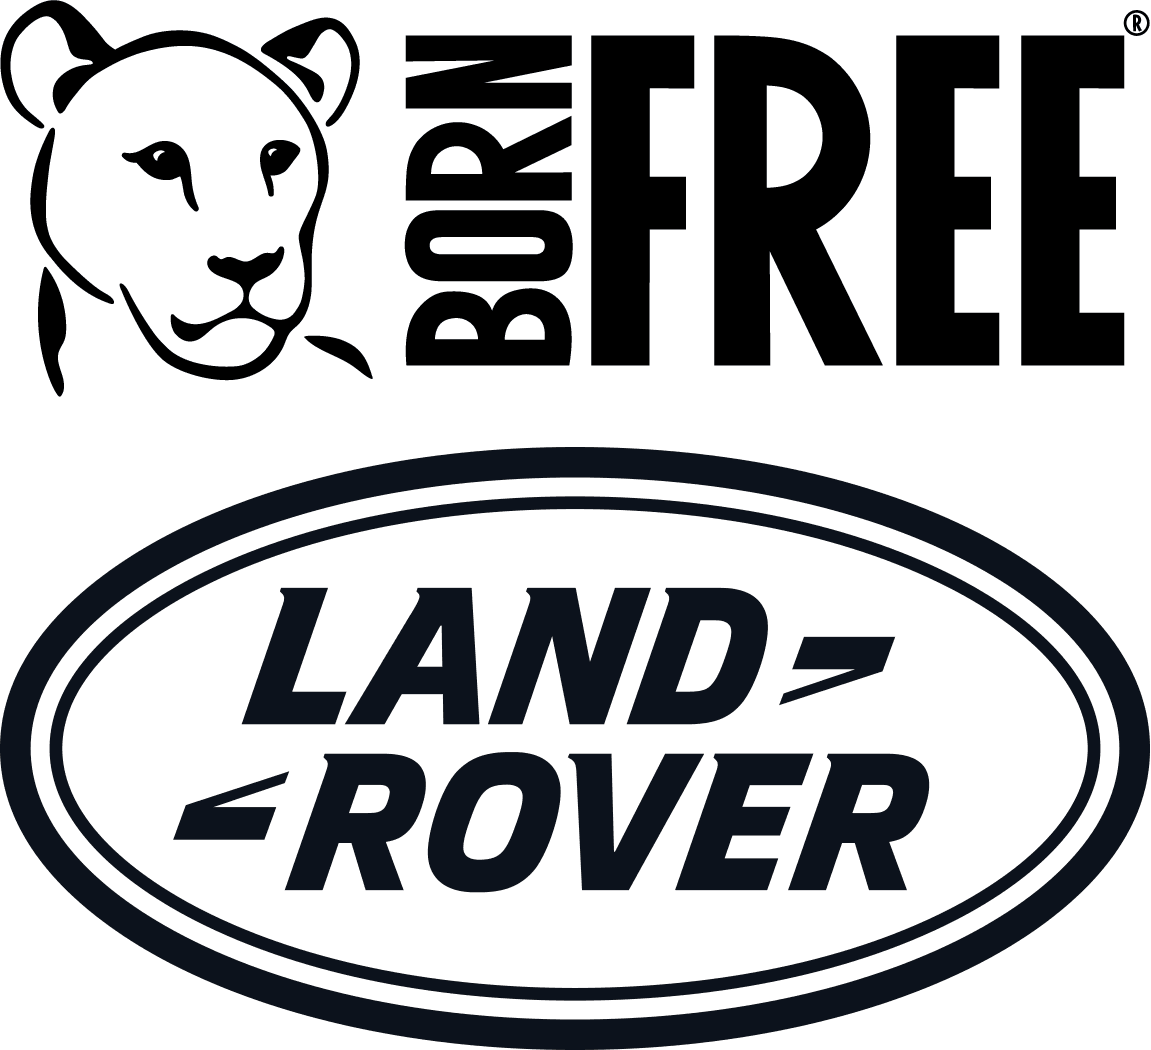 Image of Born Free Foundation & Land Rover.